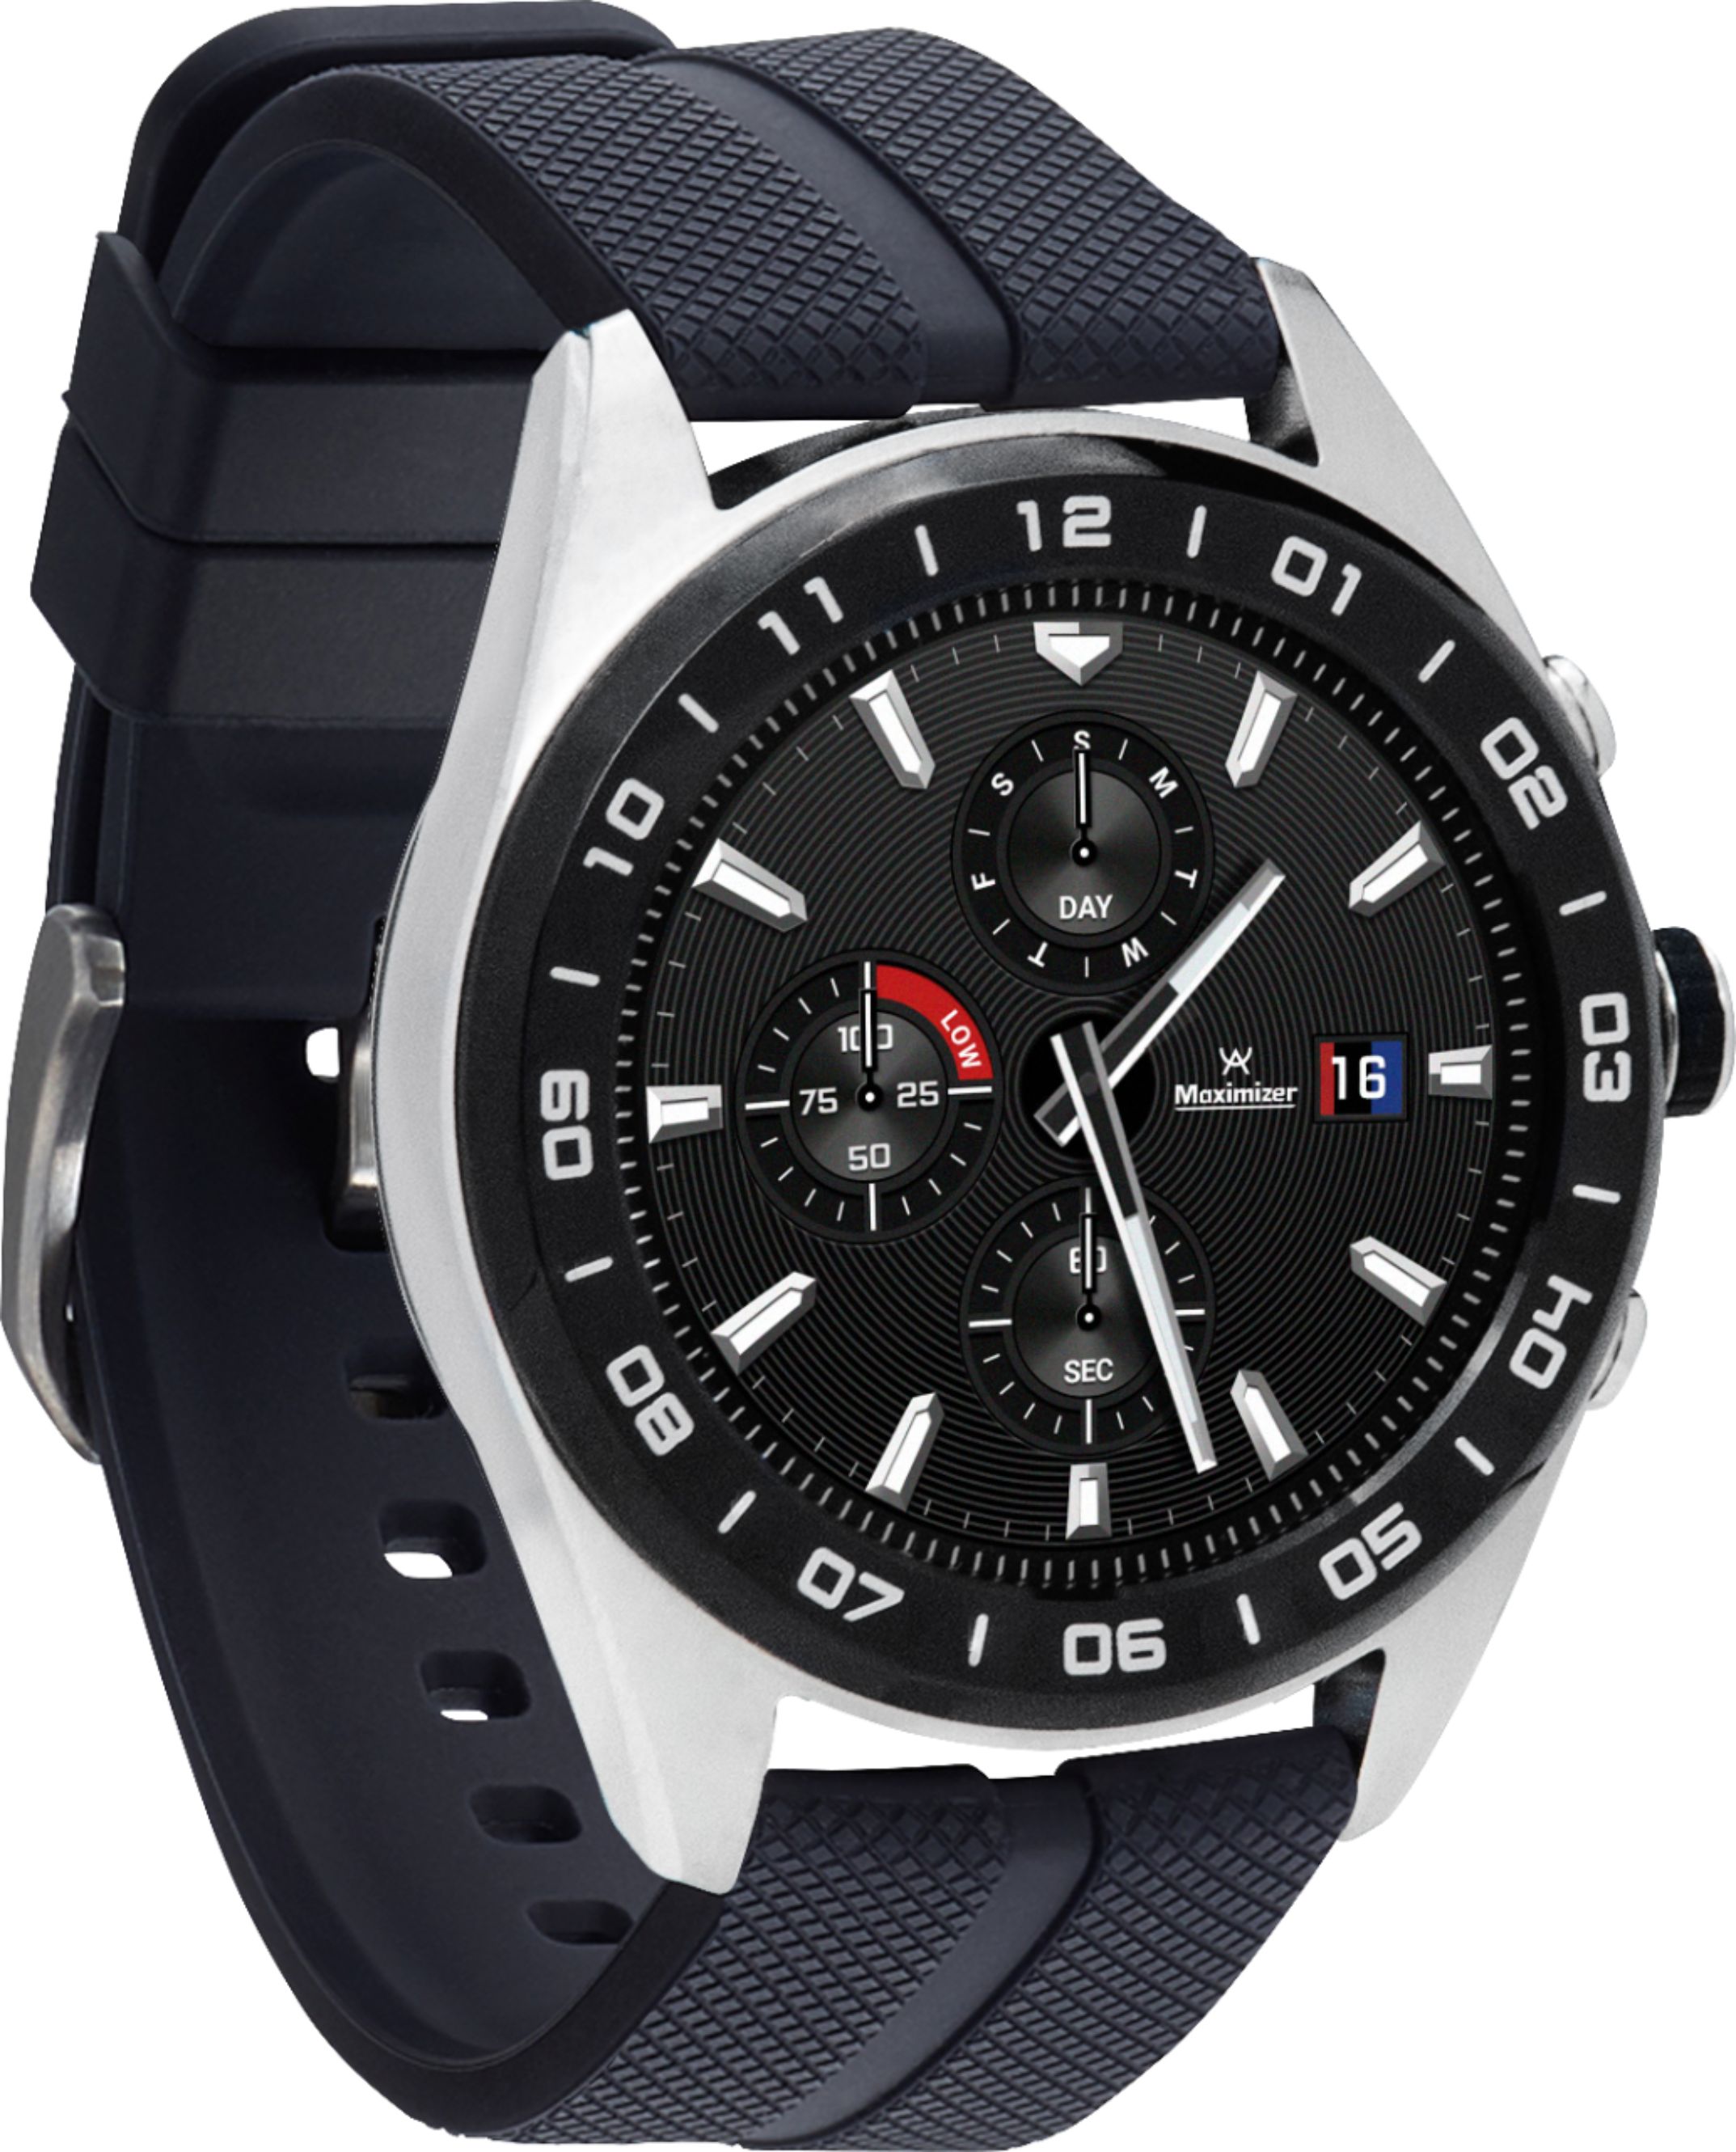 lg smartwatch best buy